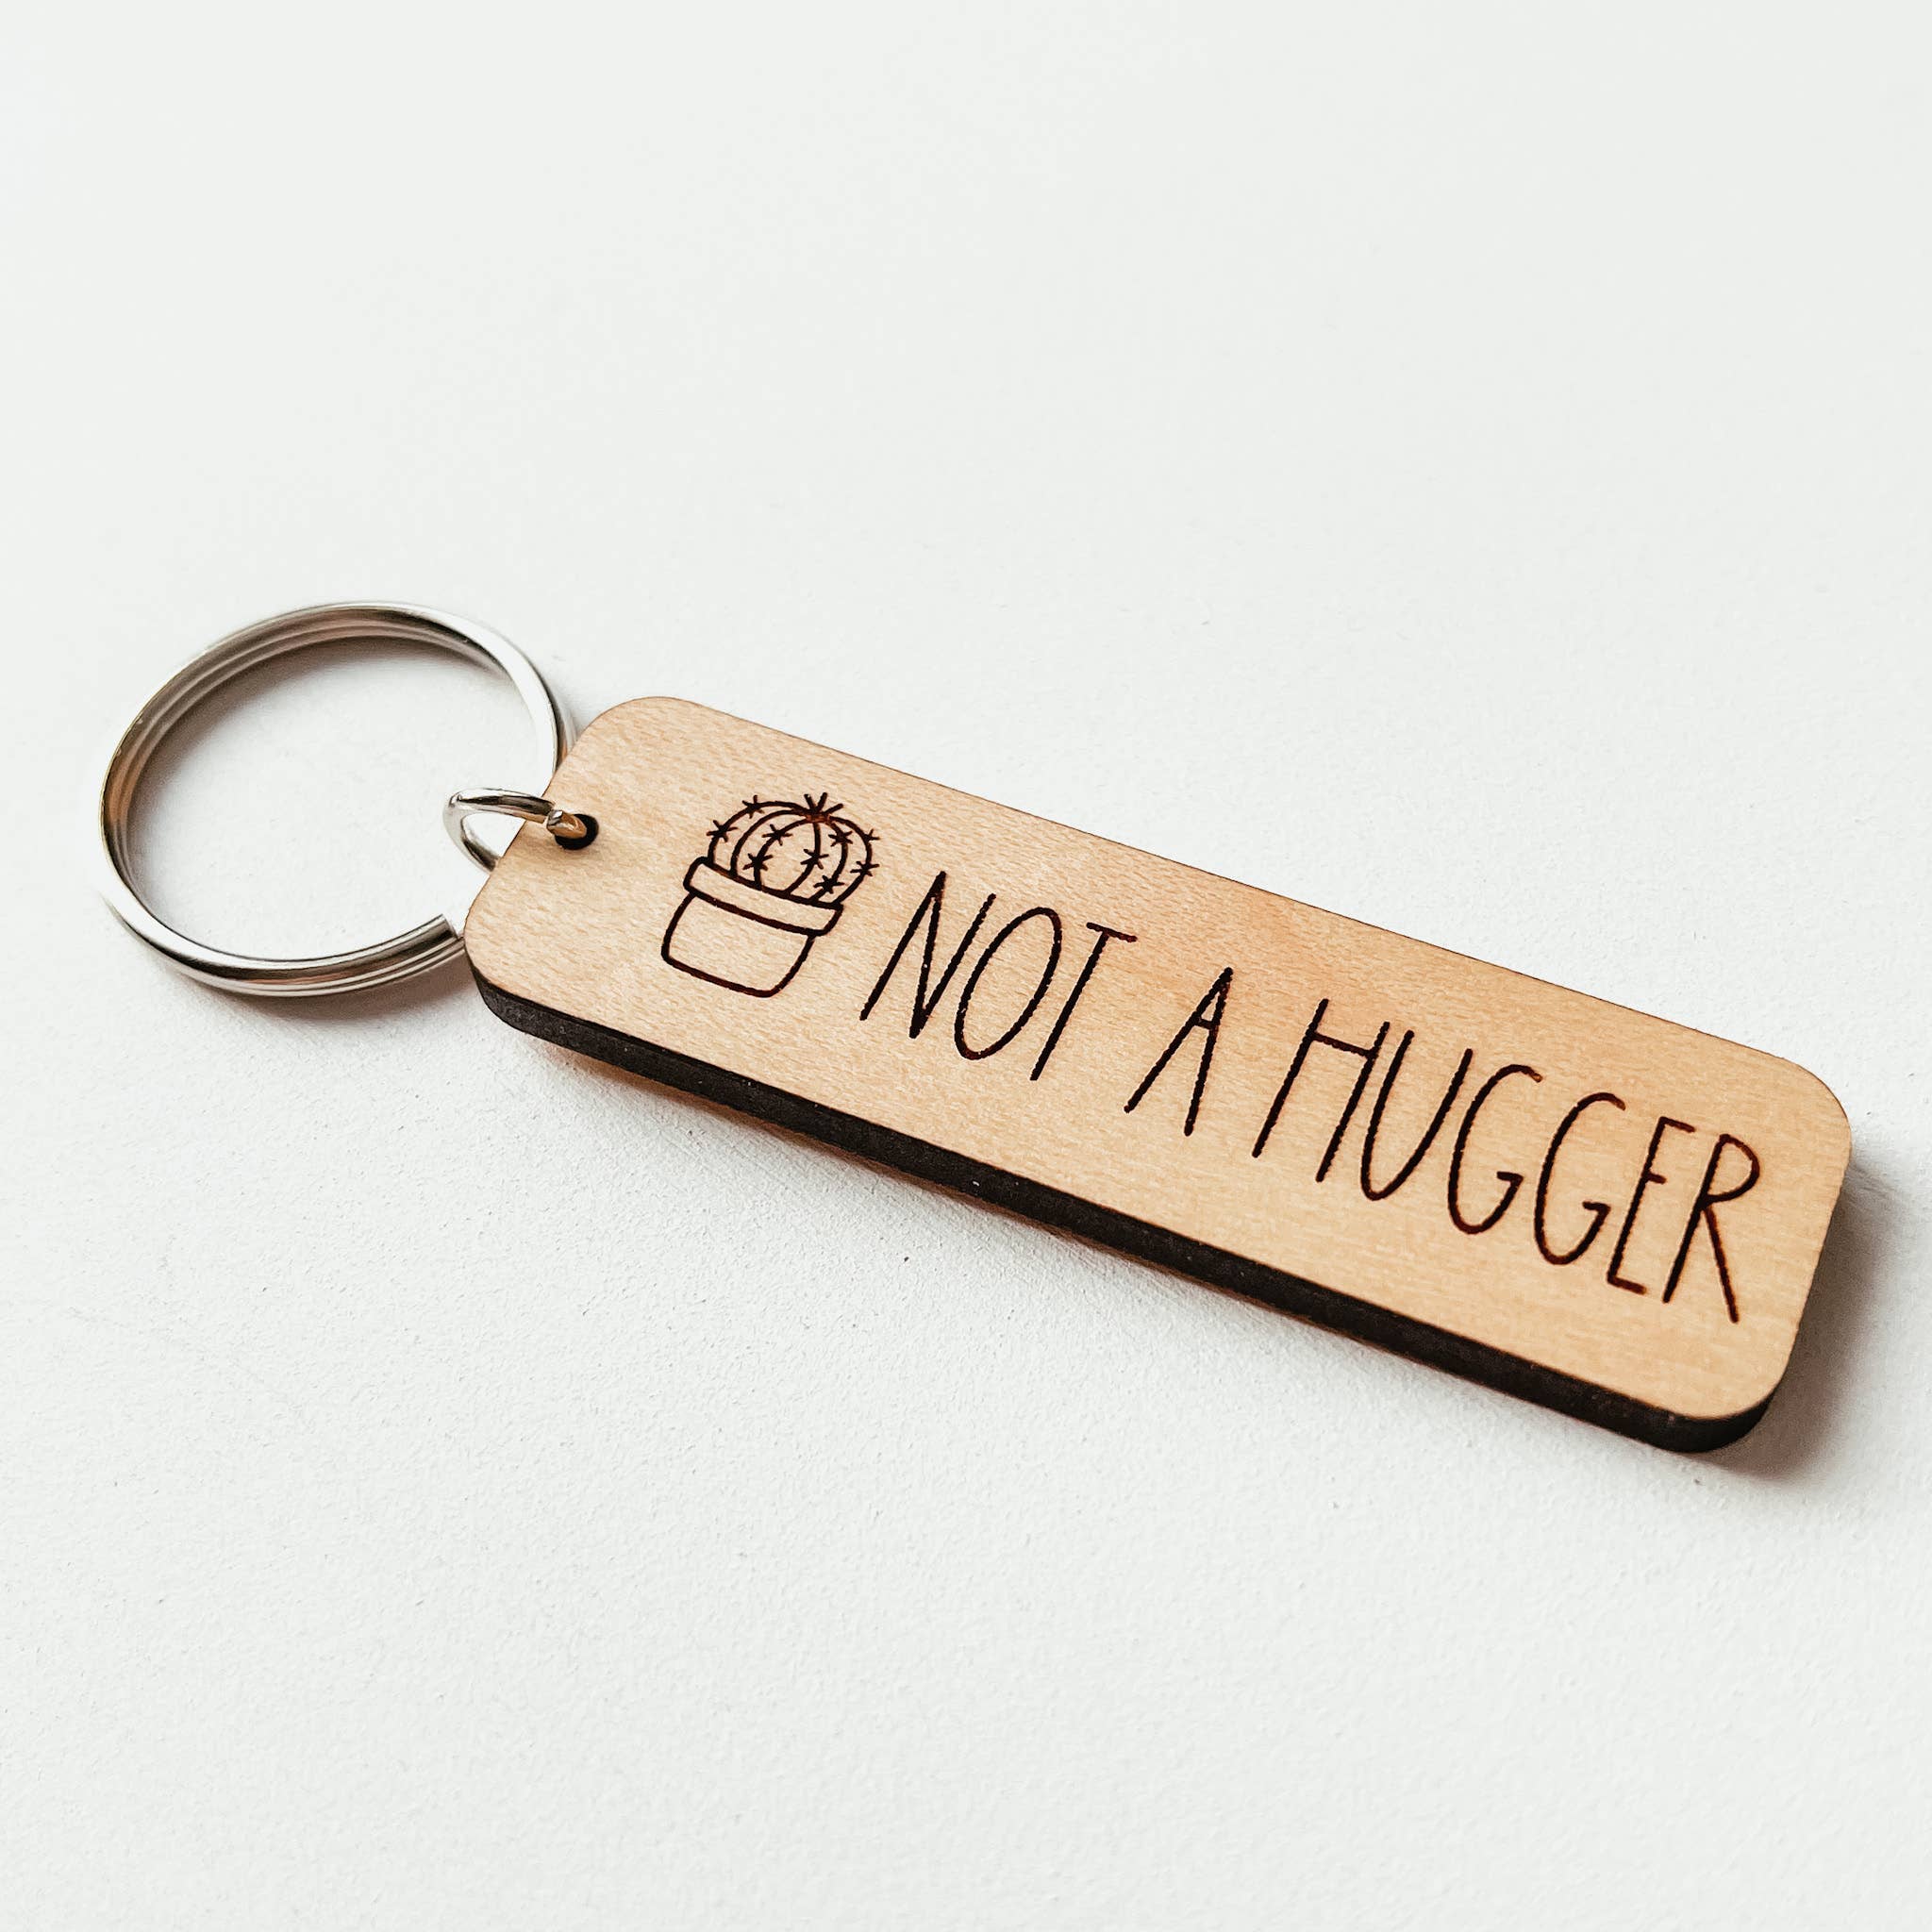 Knotty Design Co. | Not A Hugger Wooden Keychain